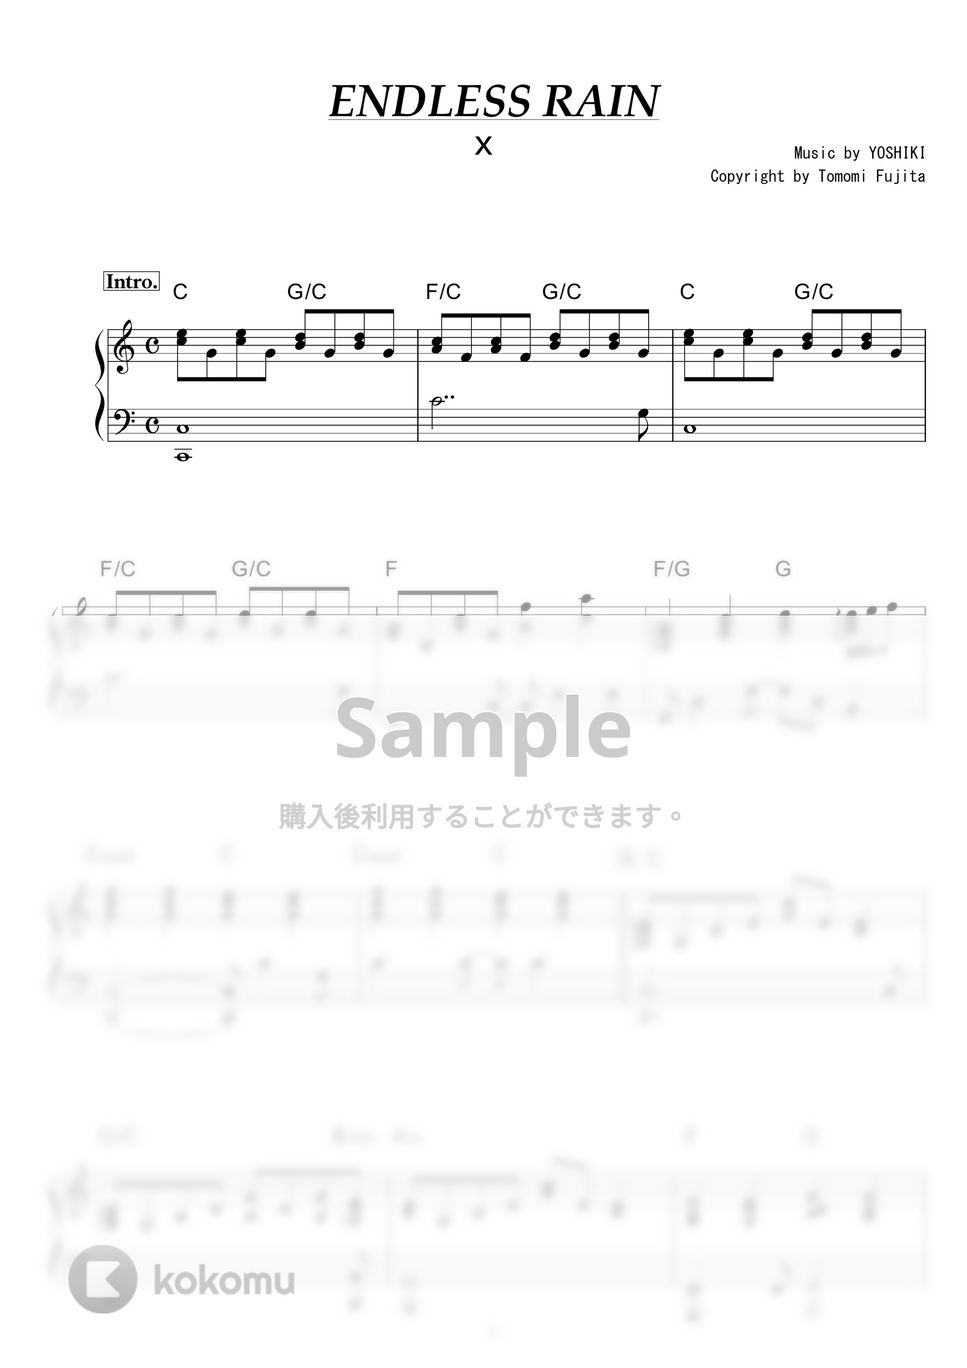 X JAPAN - ENDLESS RAIN (short ver.) by piano*score